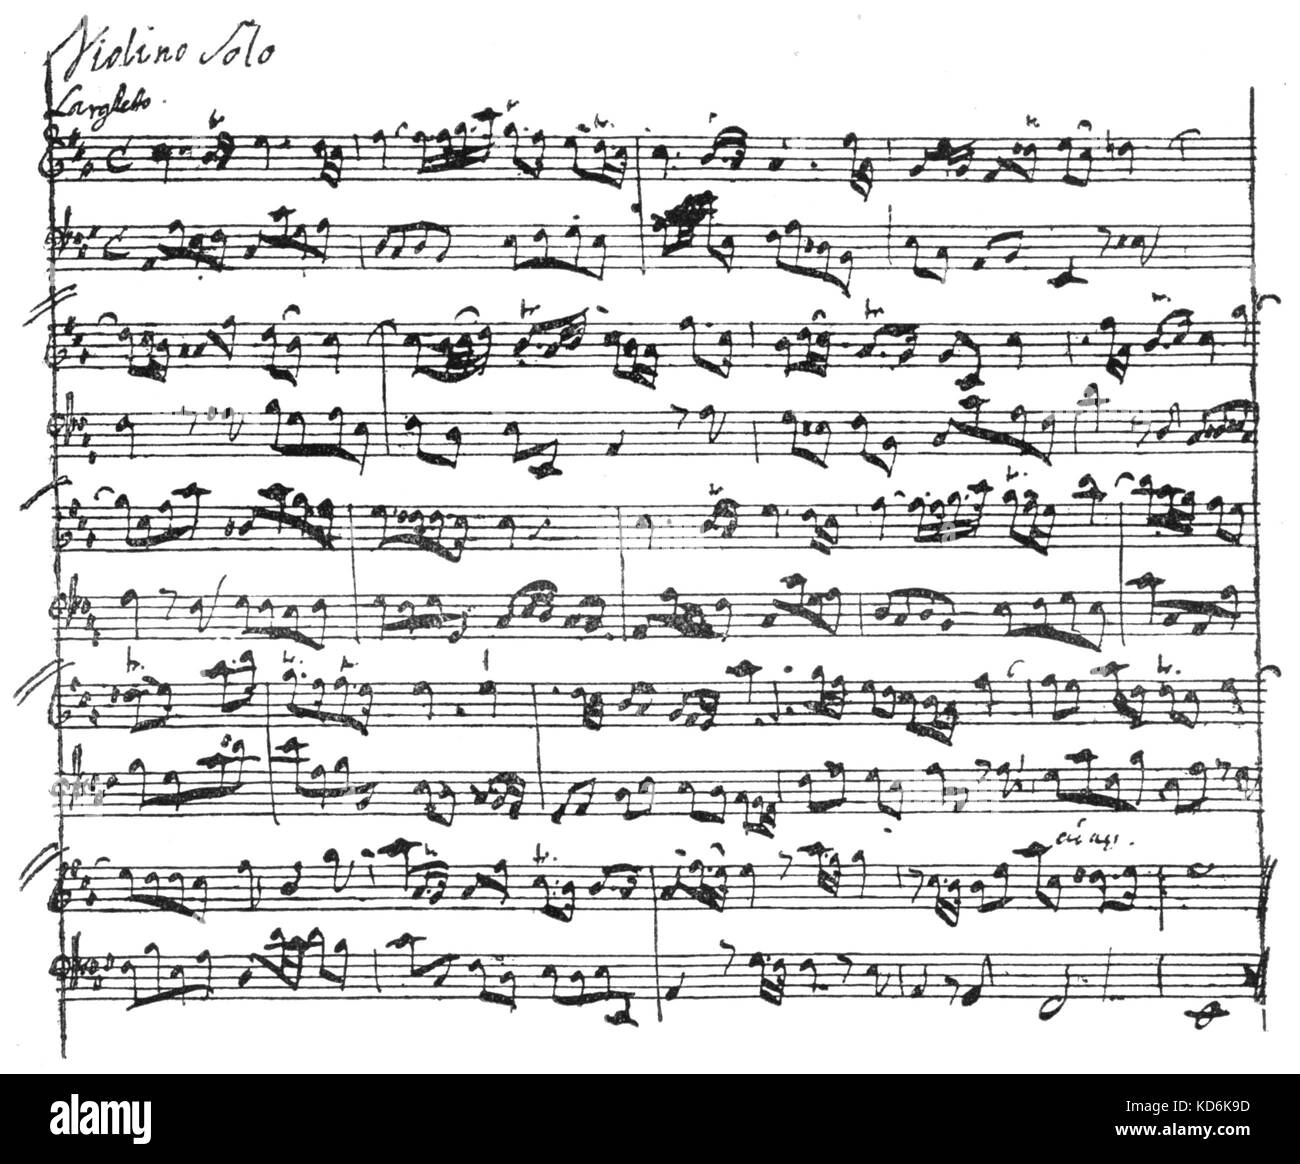 Handel's violin sonata in A-major. Larghetto. Score page in the composer's handwriting. German-English composer, 1685-1759. (B/W) Stock Photo